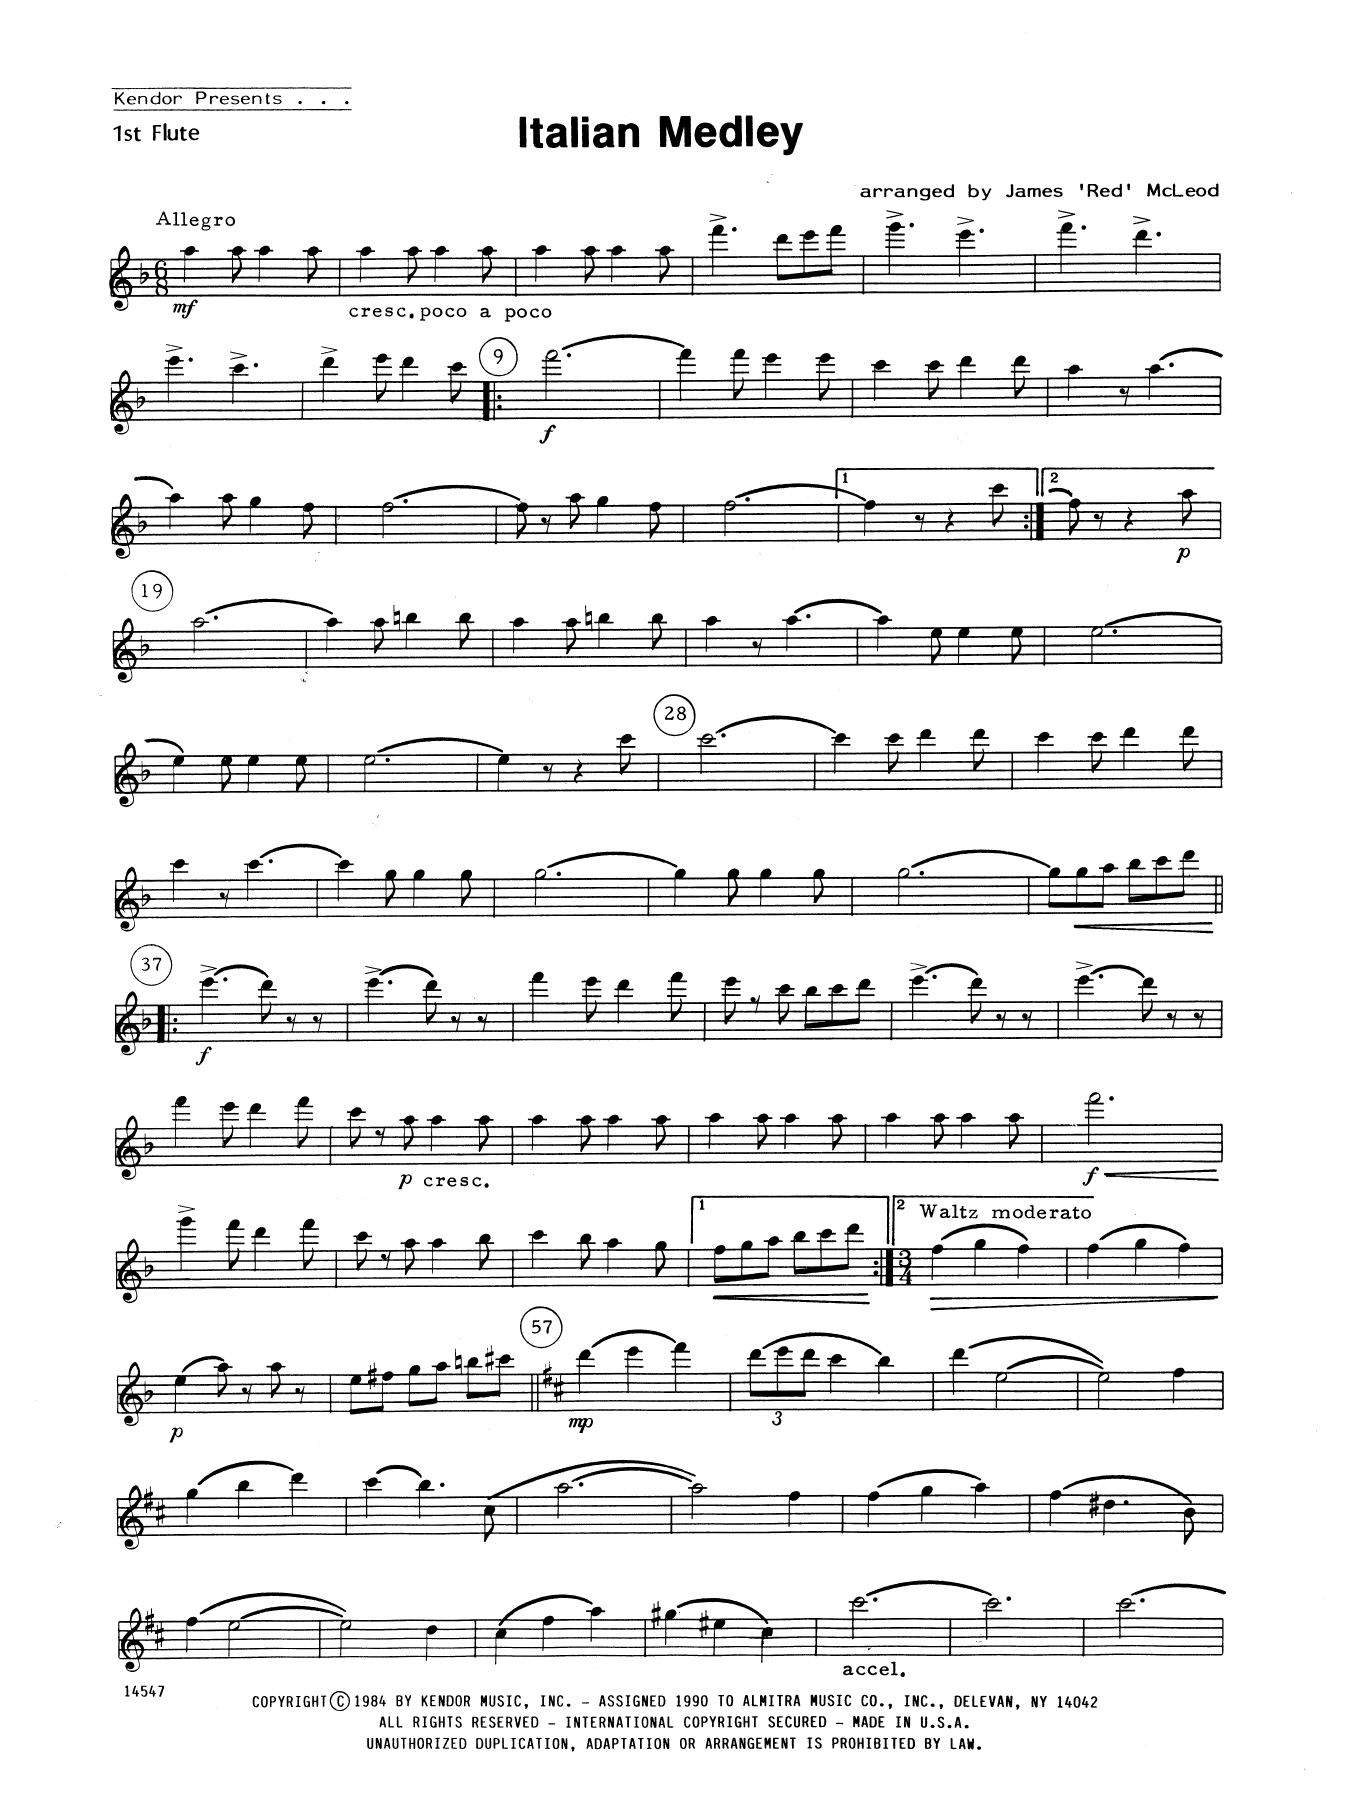 Italian Medley - 1st Flute (Woodwind Ensemble) von James 'Red' McLeod